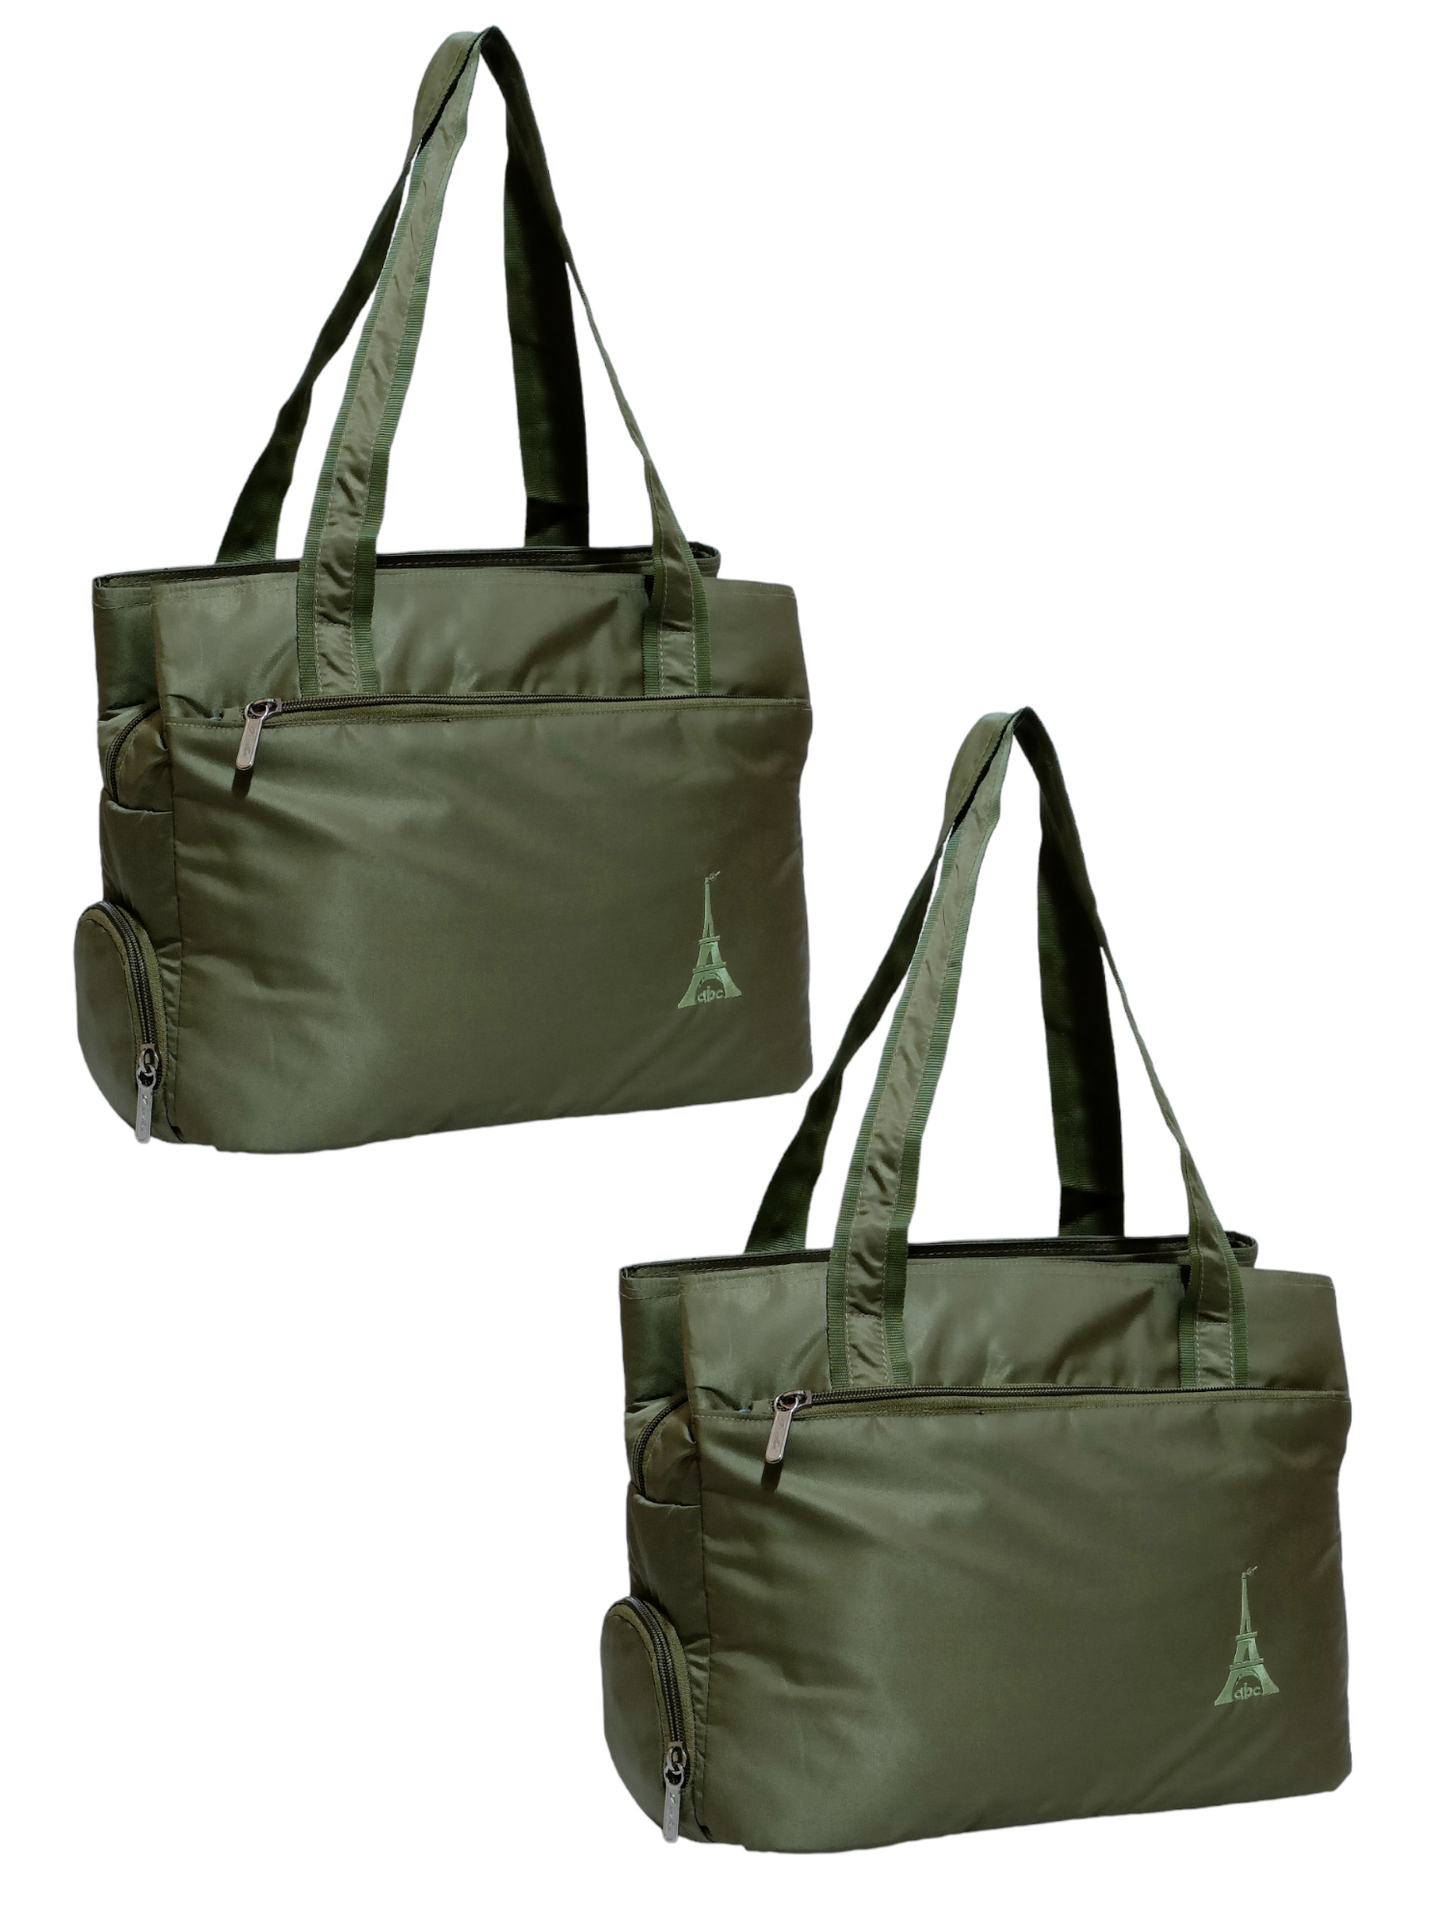 Abc's office use, school use, daily use light weight soft PU fabric handbag